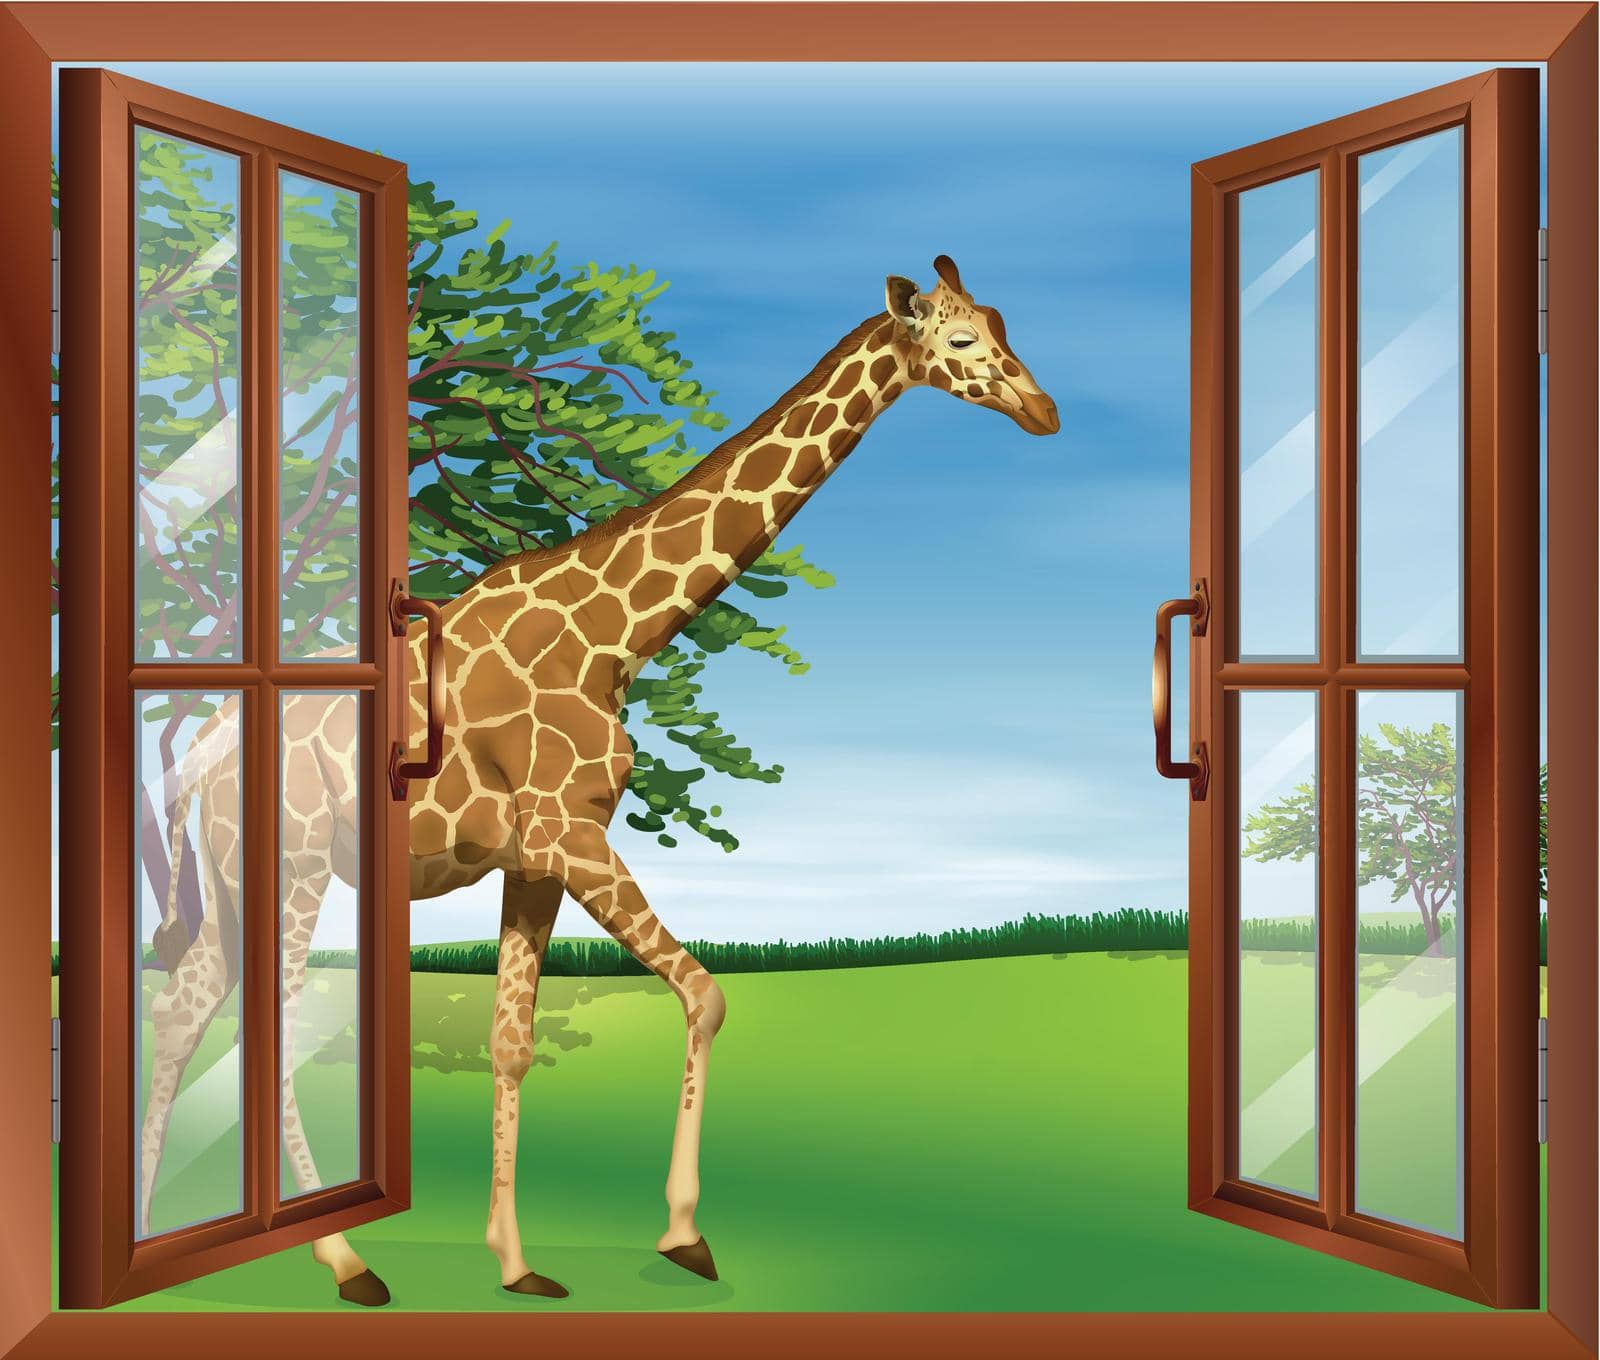 A giraffe outside the window by iimages